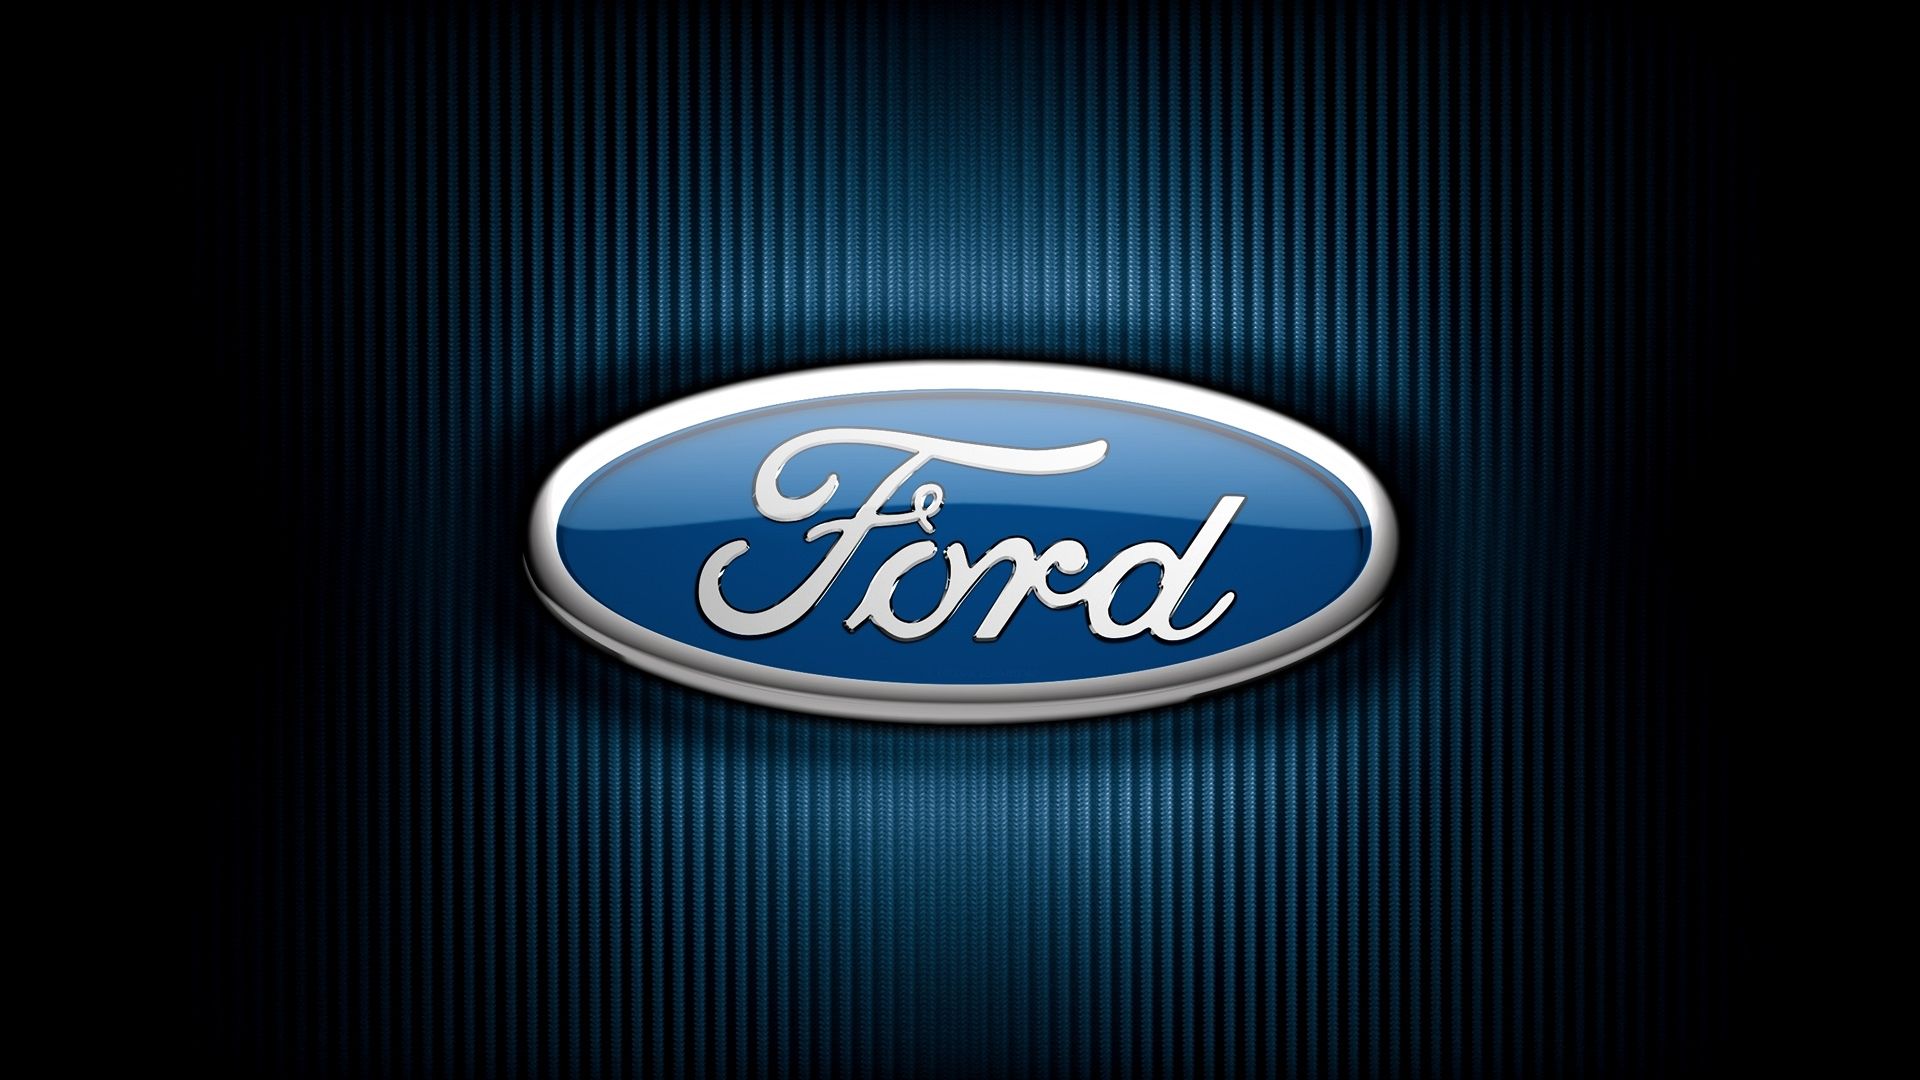 ford logo wallpaper 1920 X 1080 | Ford logo, Built ford tough ...